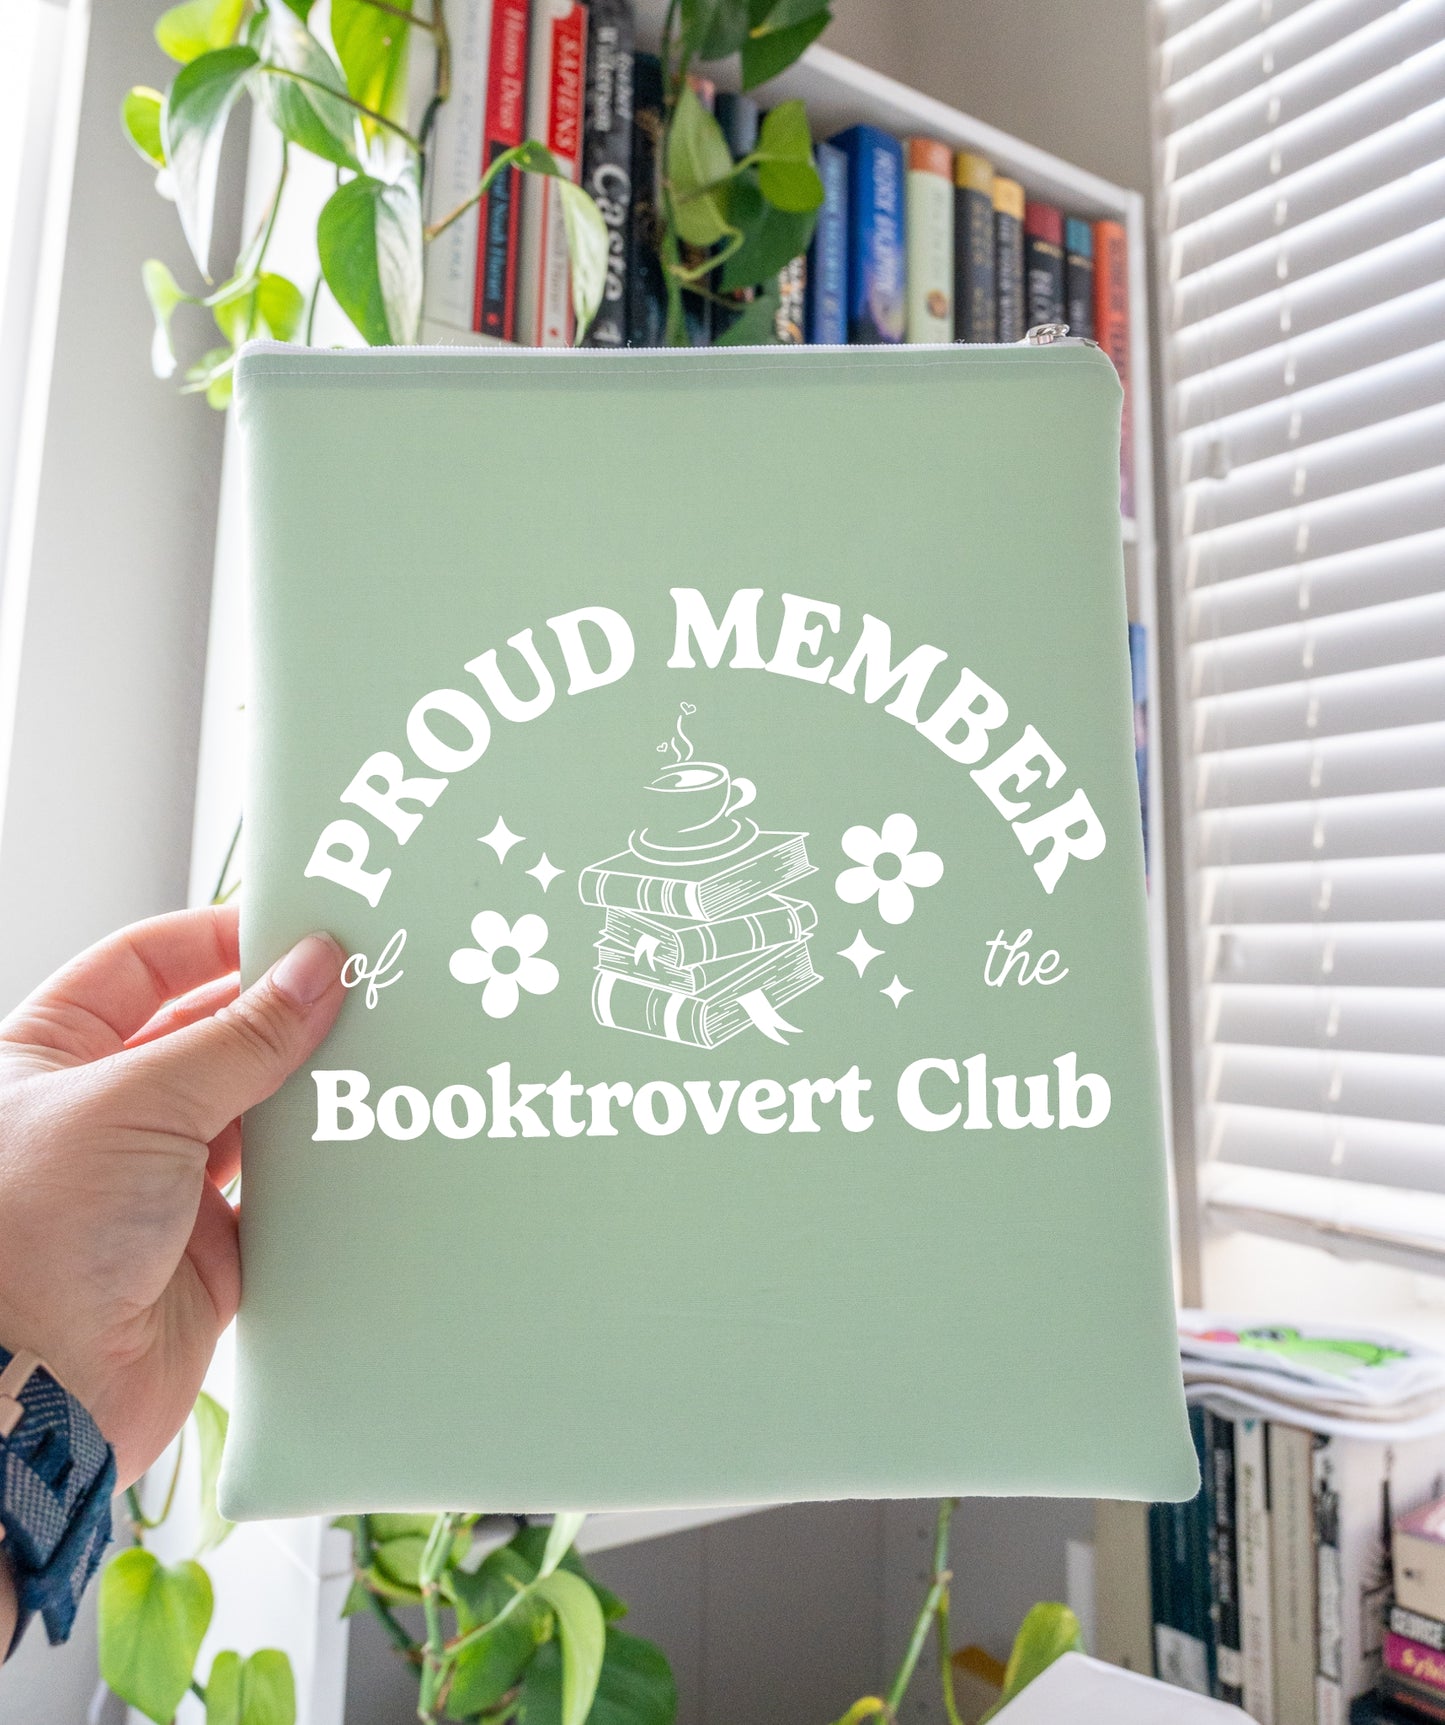 Booktrovert Book Club Sleeve - Customizable